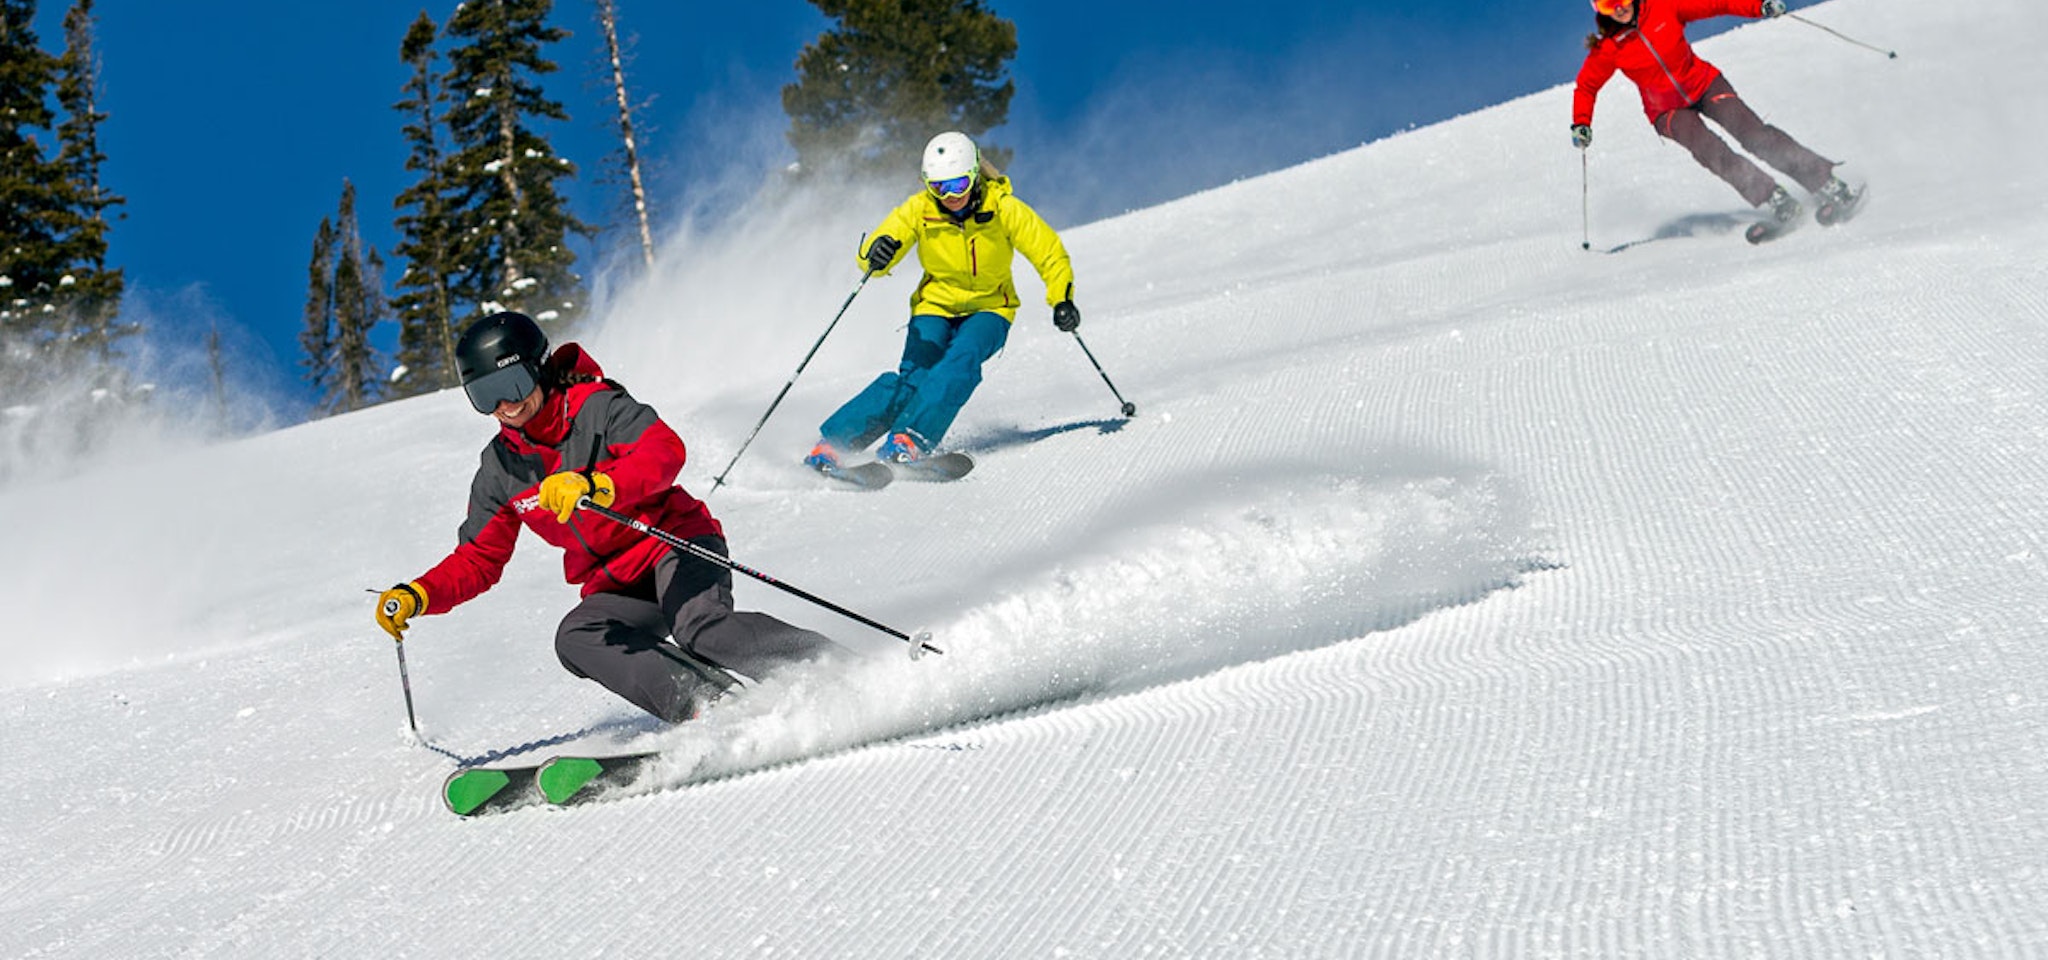 skiing in fresh groomers